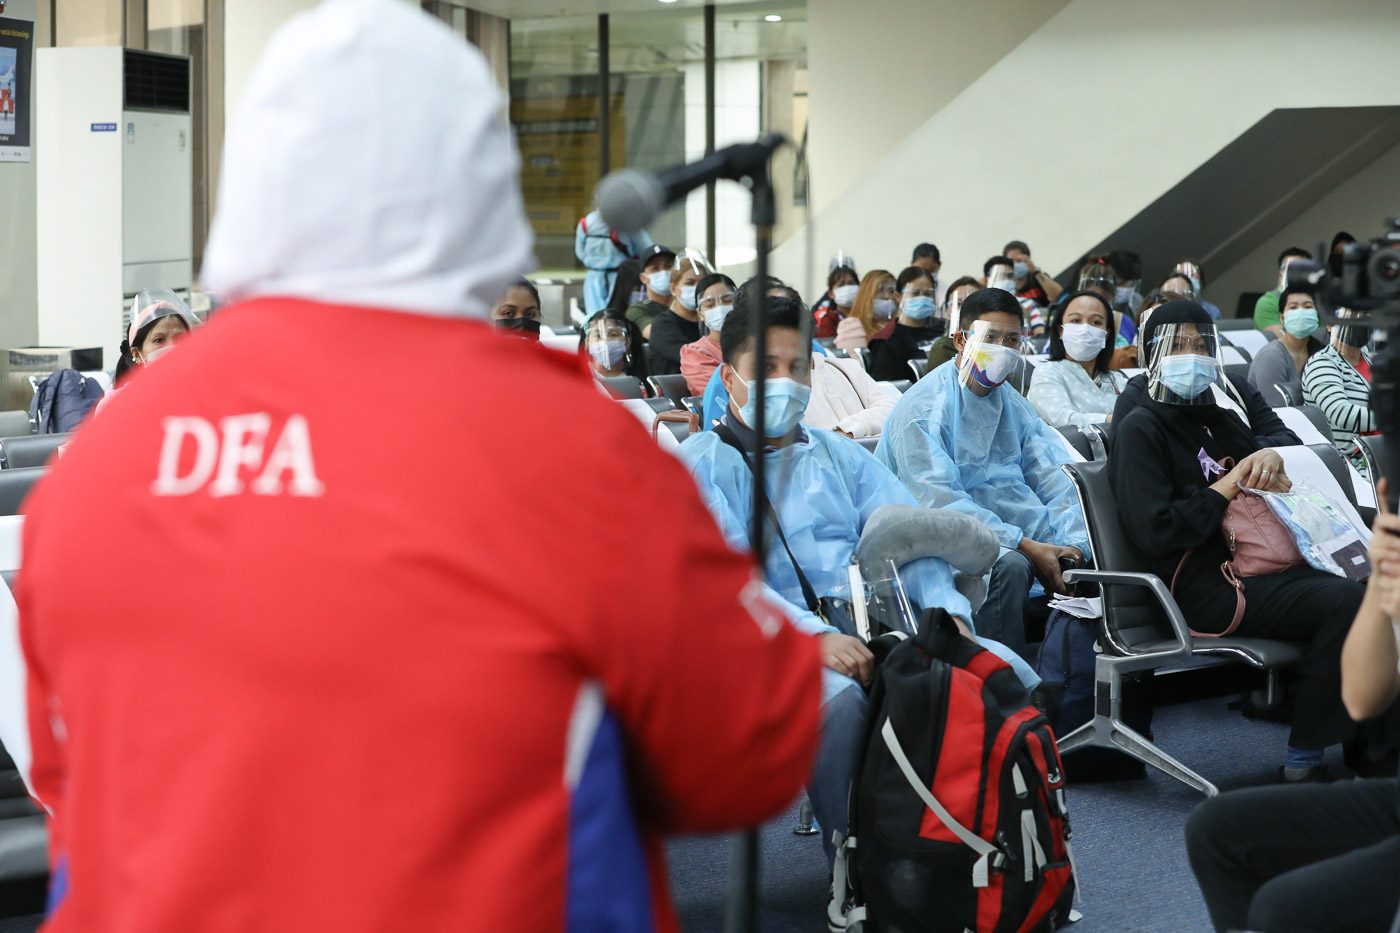 Shortage of quarantine facilities prevents DFA from repatriating OFWs faster